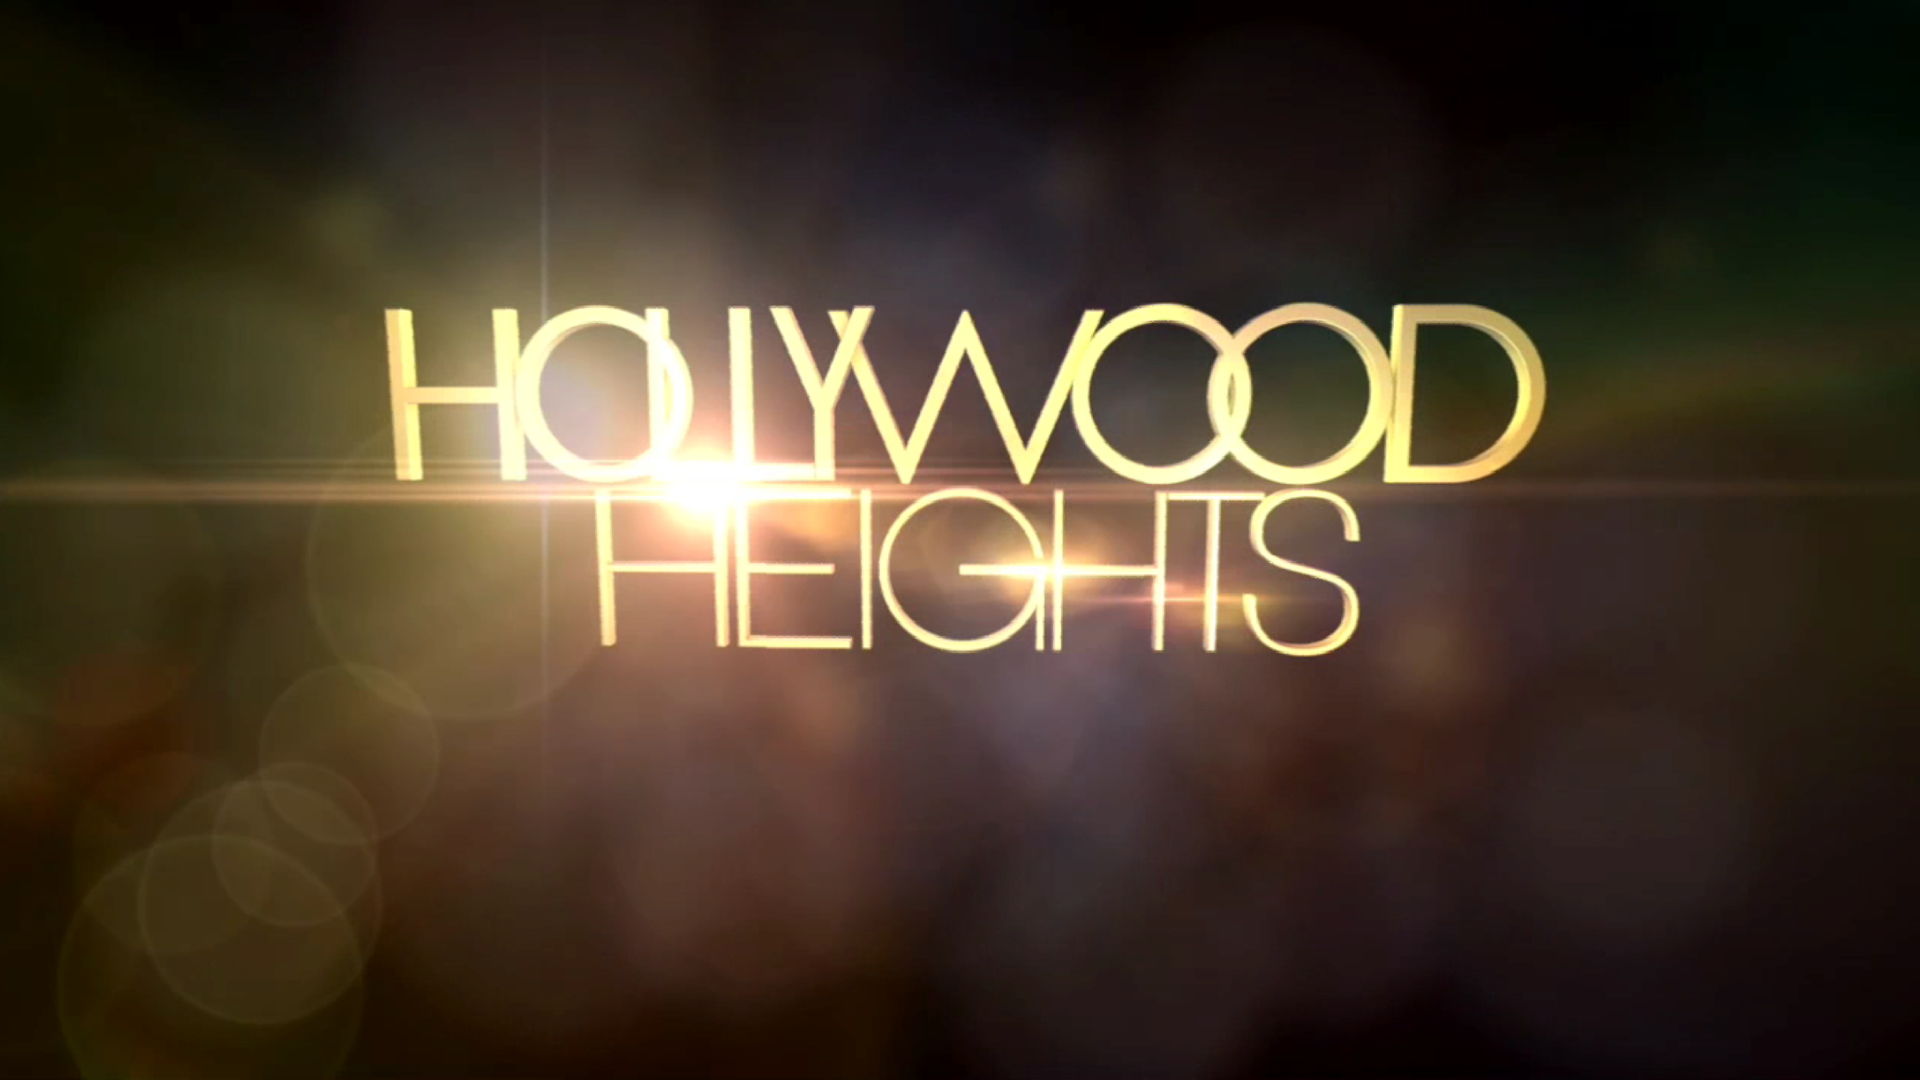 Холливуд программа. Hollywood heights. Канал Голливуд. Голливудская интро.